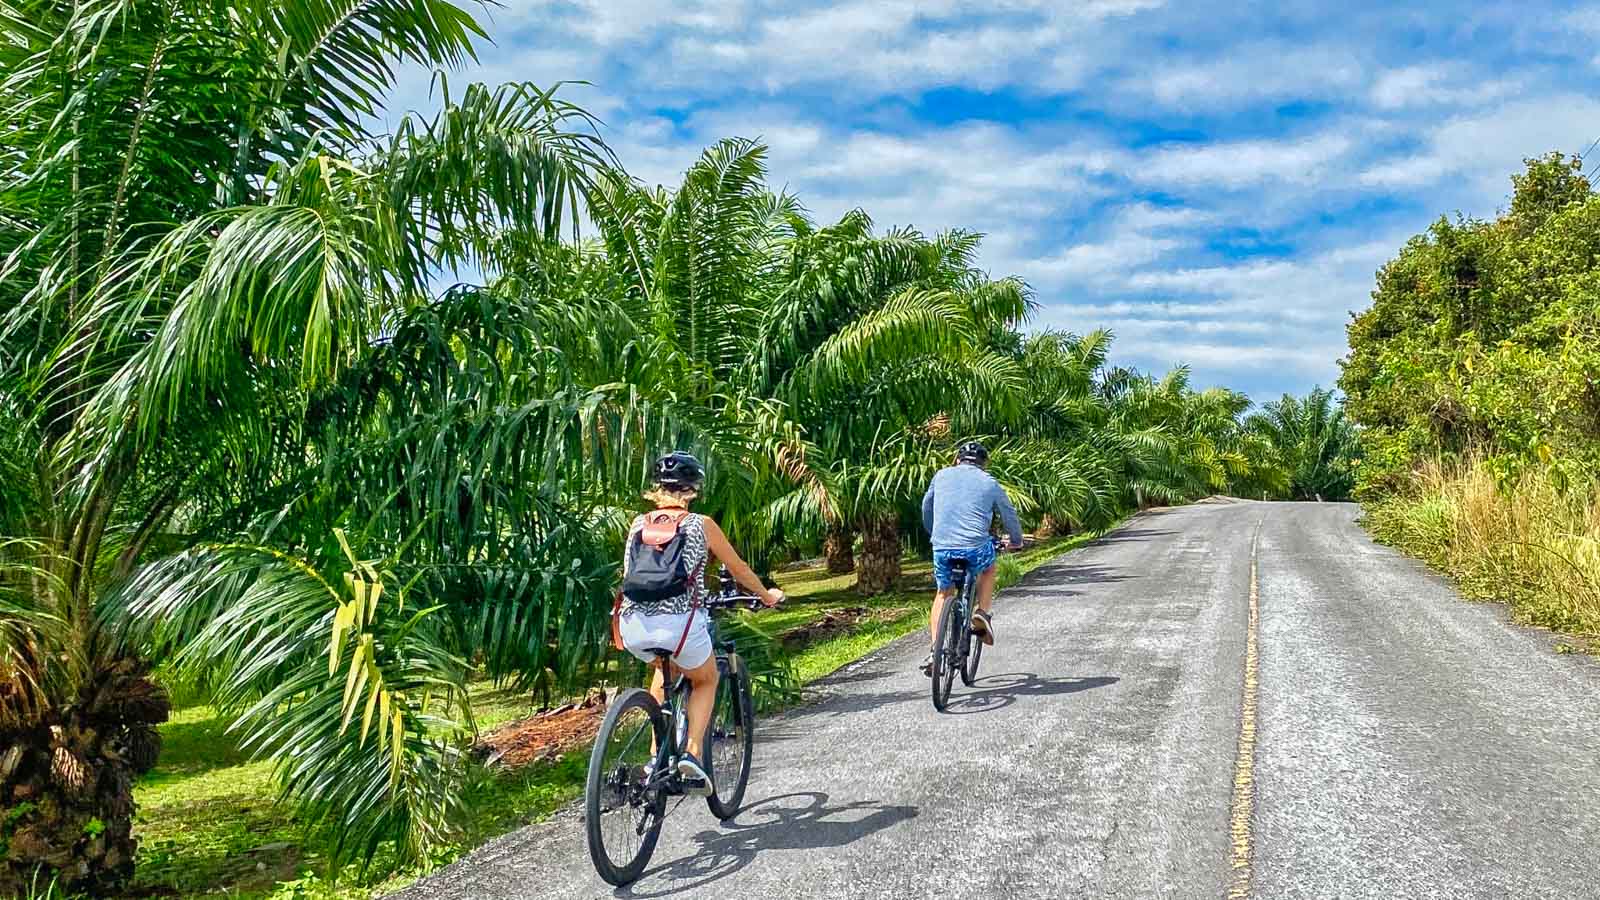 Cyclists riding through Palm tree plantation